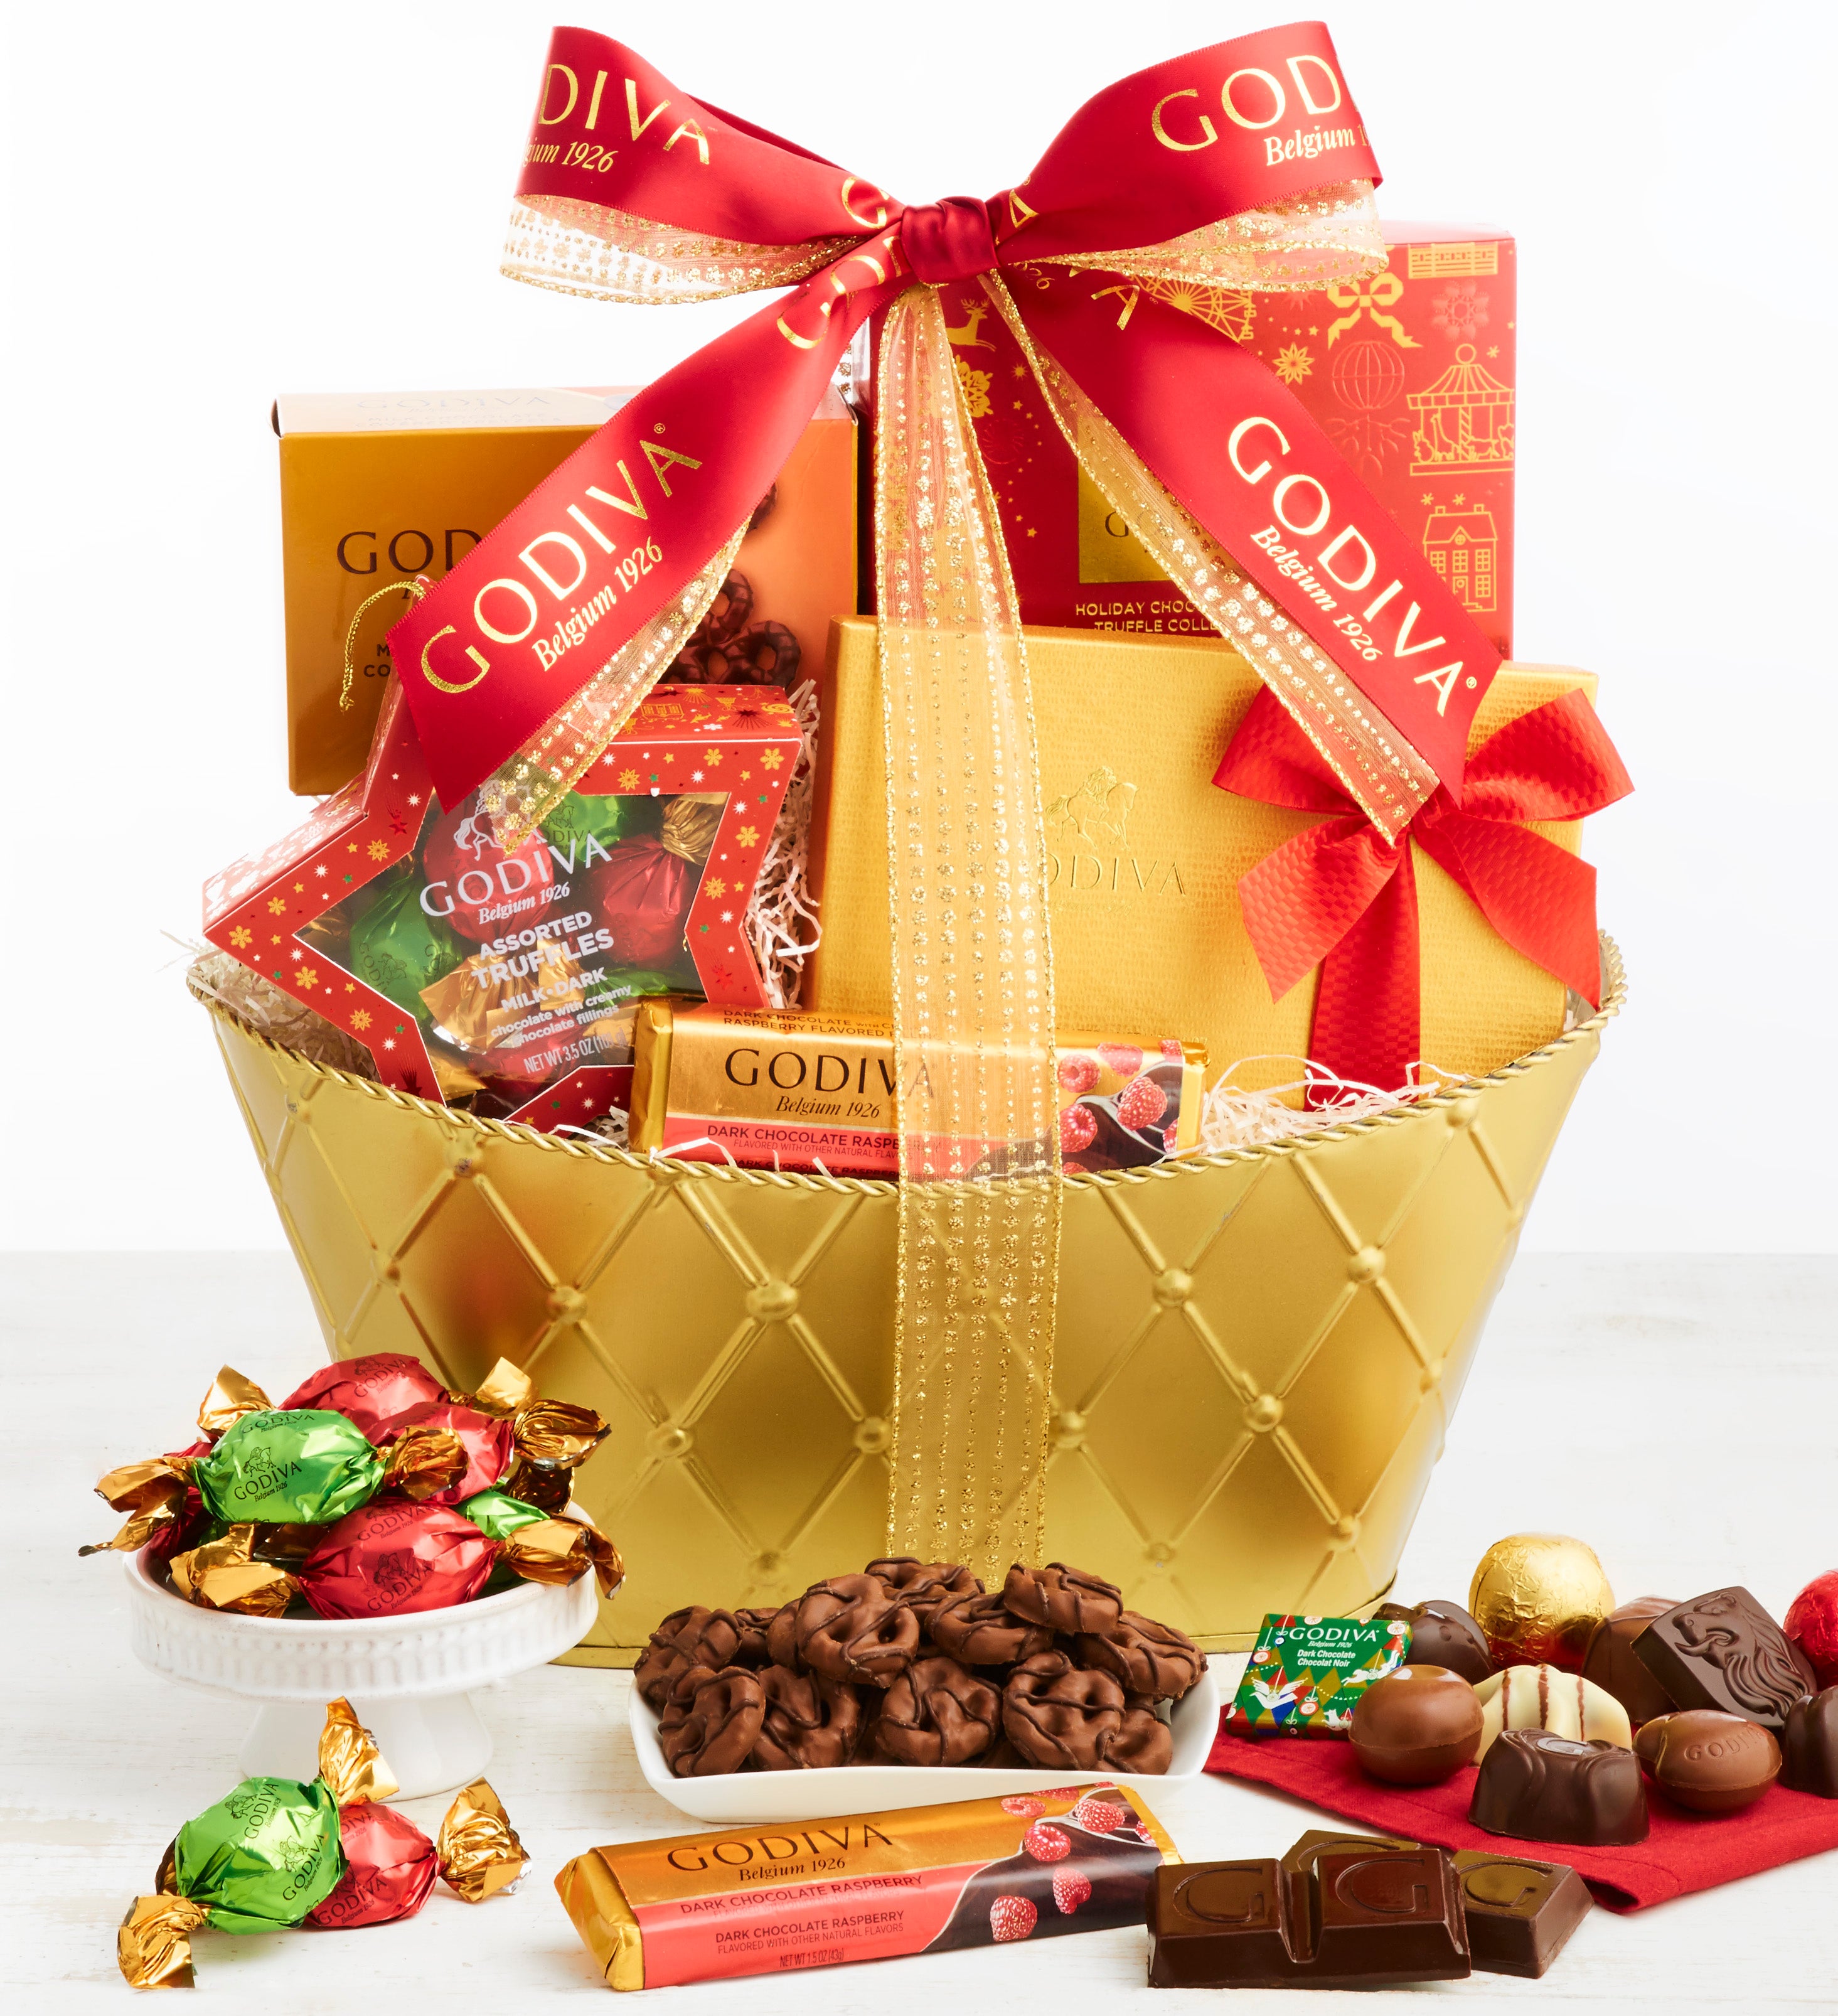 Exclusive 2020 Godiva Holiday Gift Basket